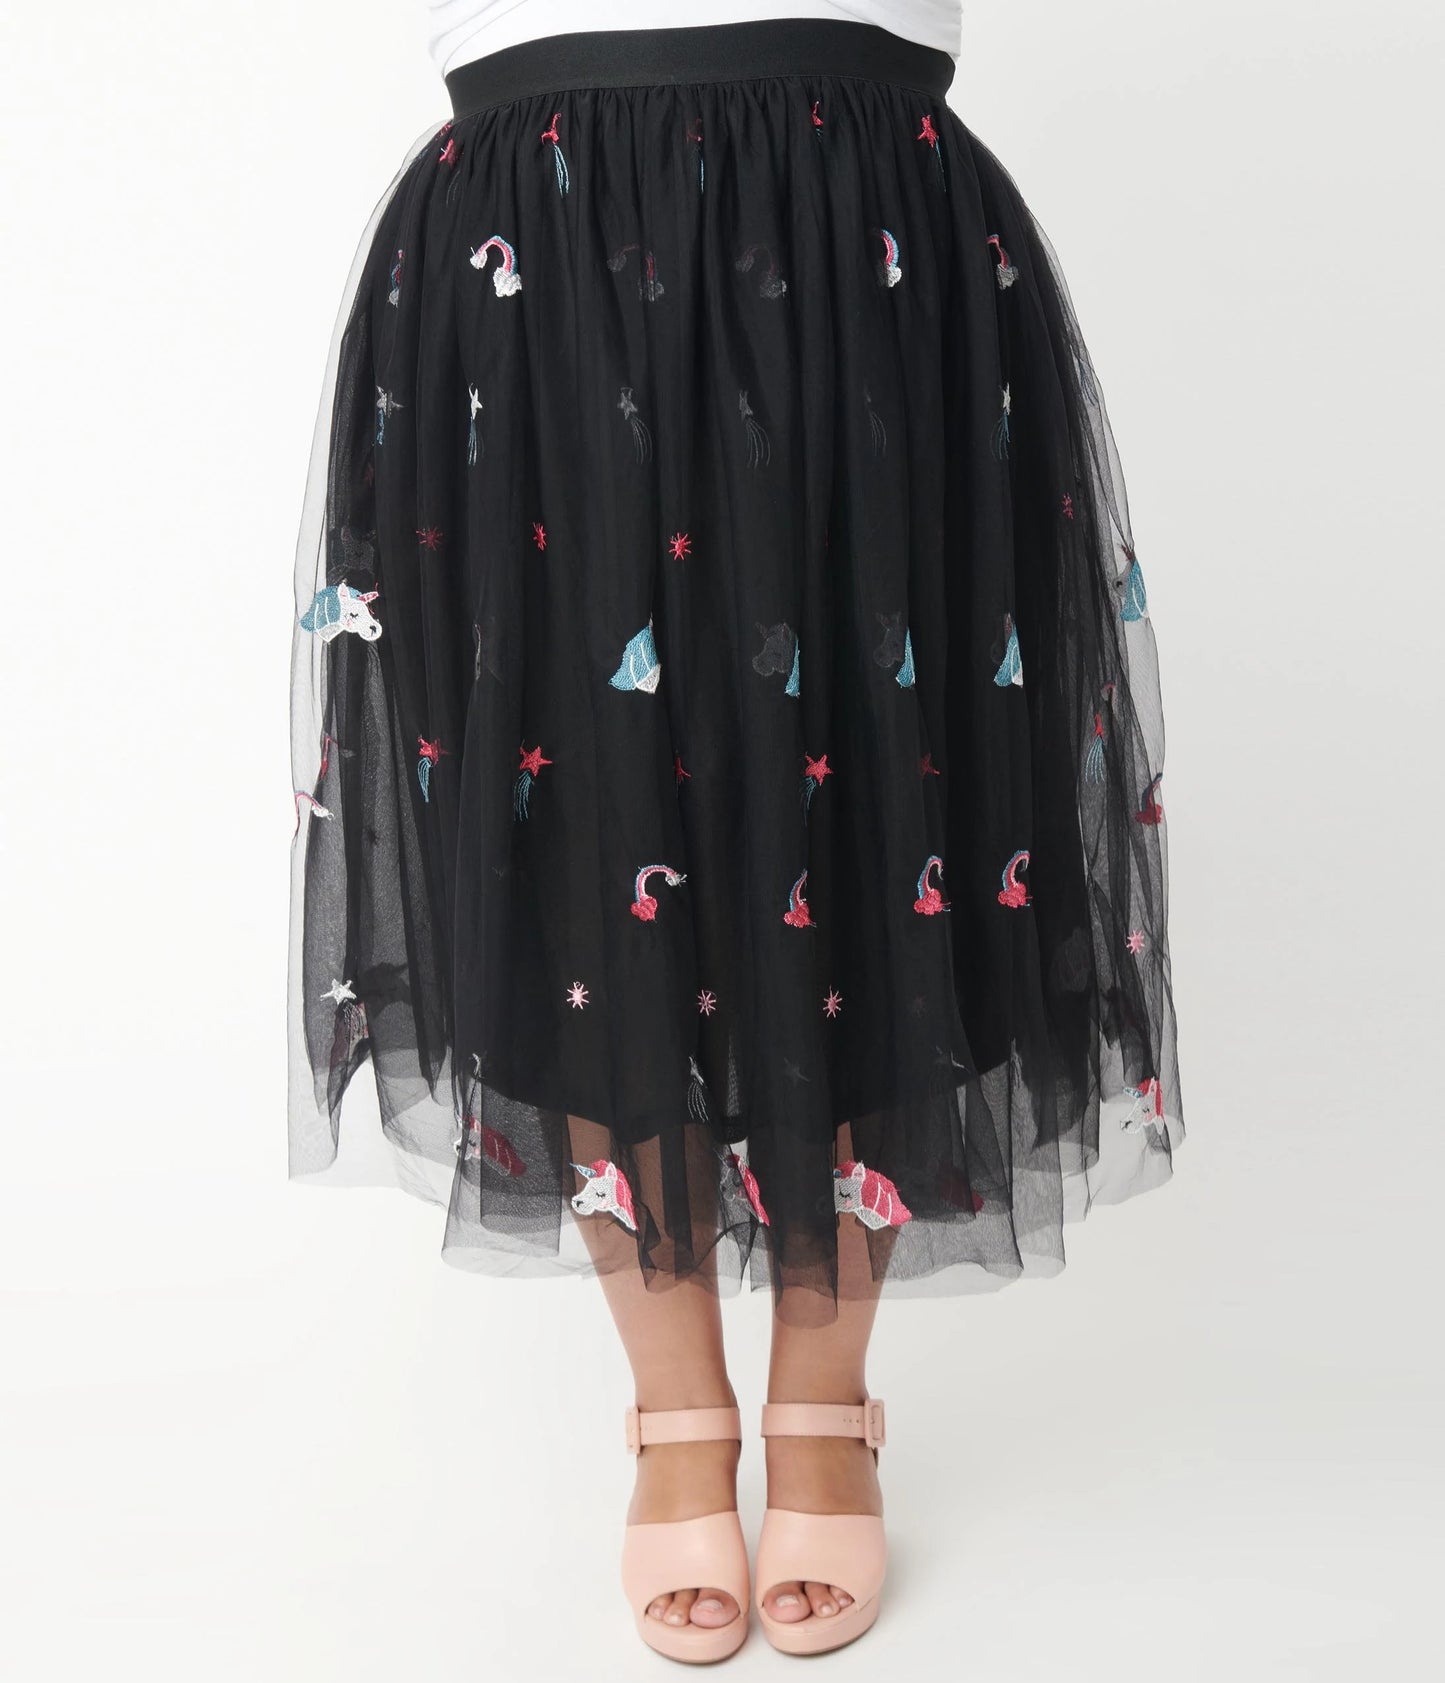 Hilty Black Tulle & Rainbow Unicorn Skirt by Unique Vintage